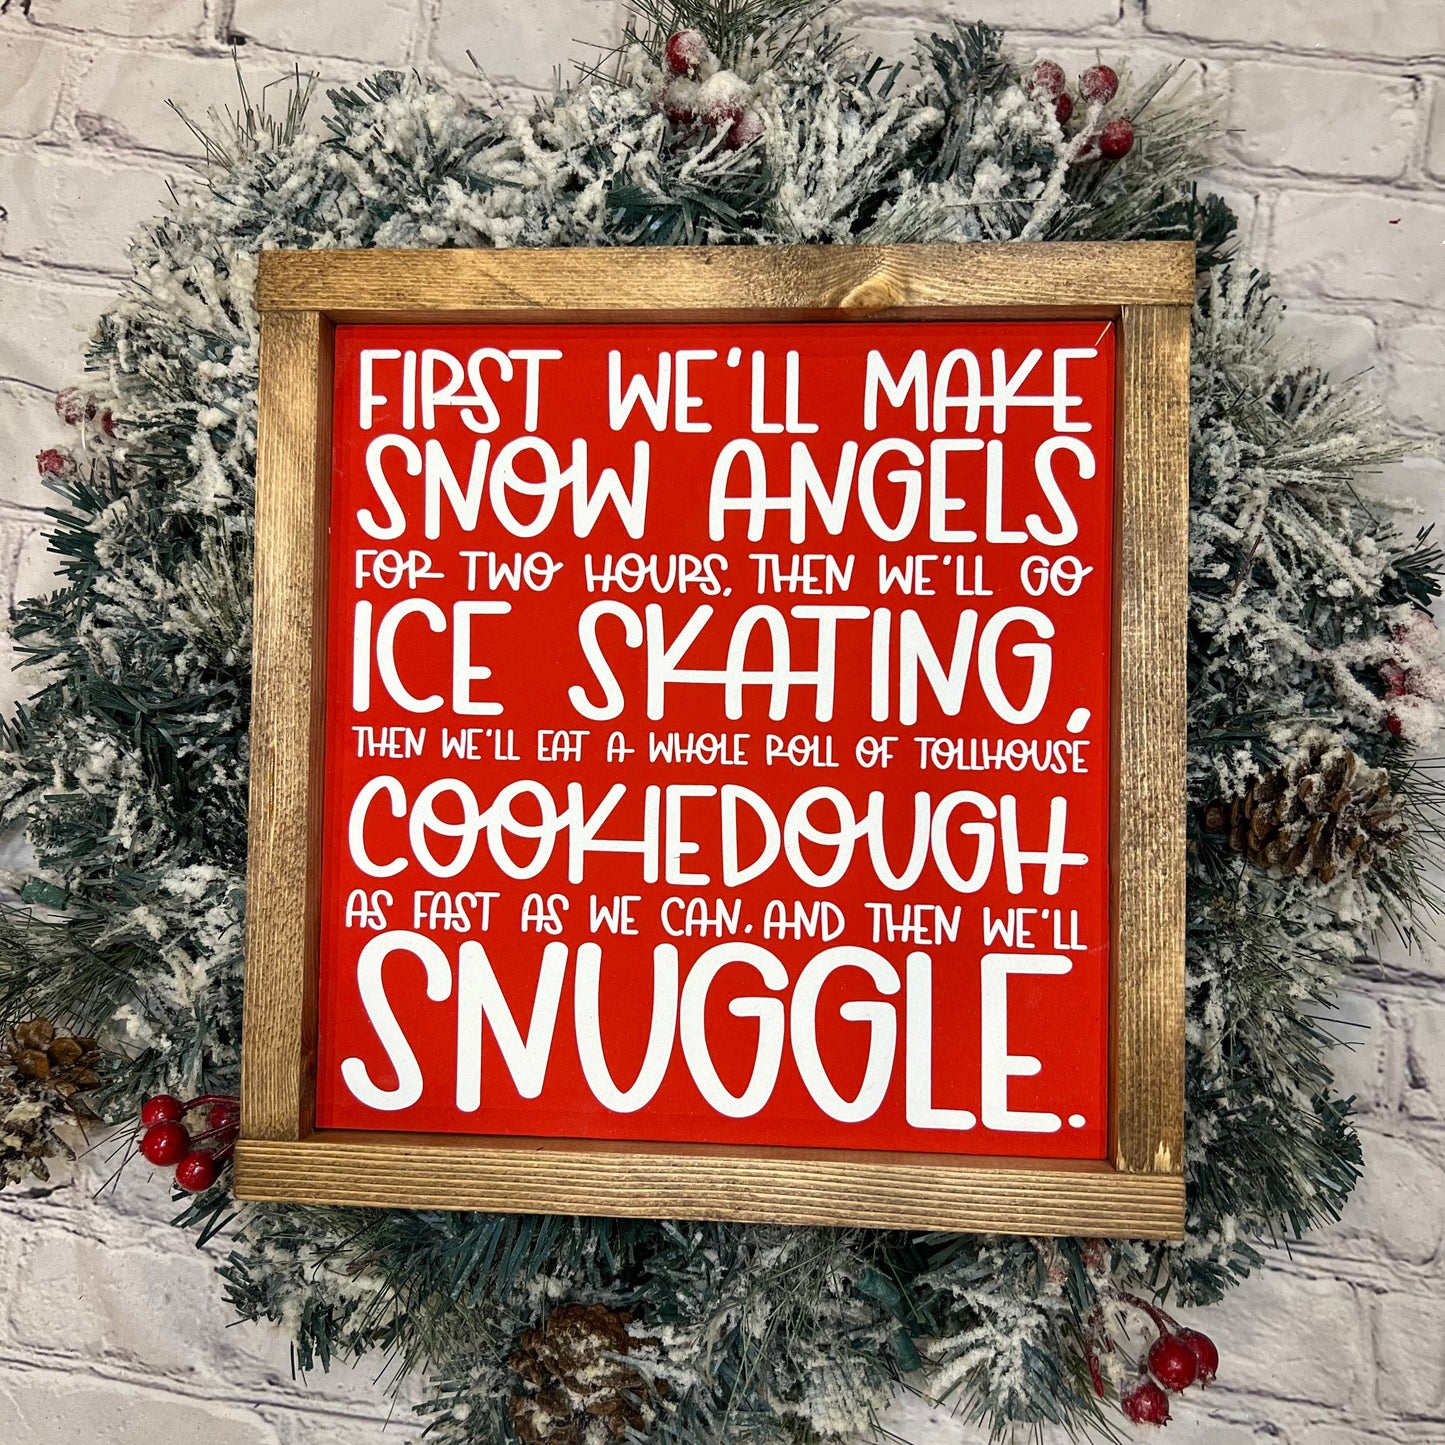 snuggle Christmas elf wood sign [FREE SHIPPING!]